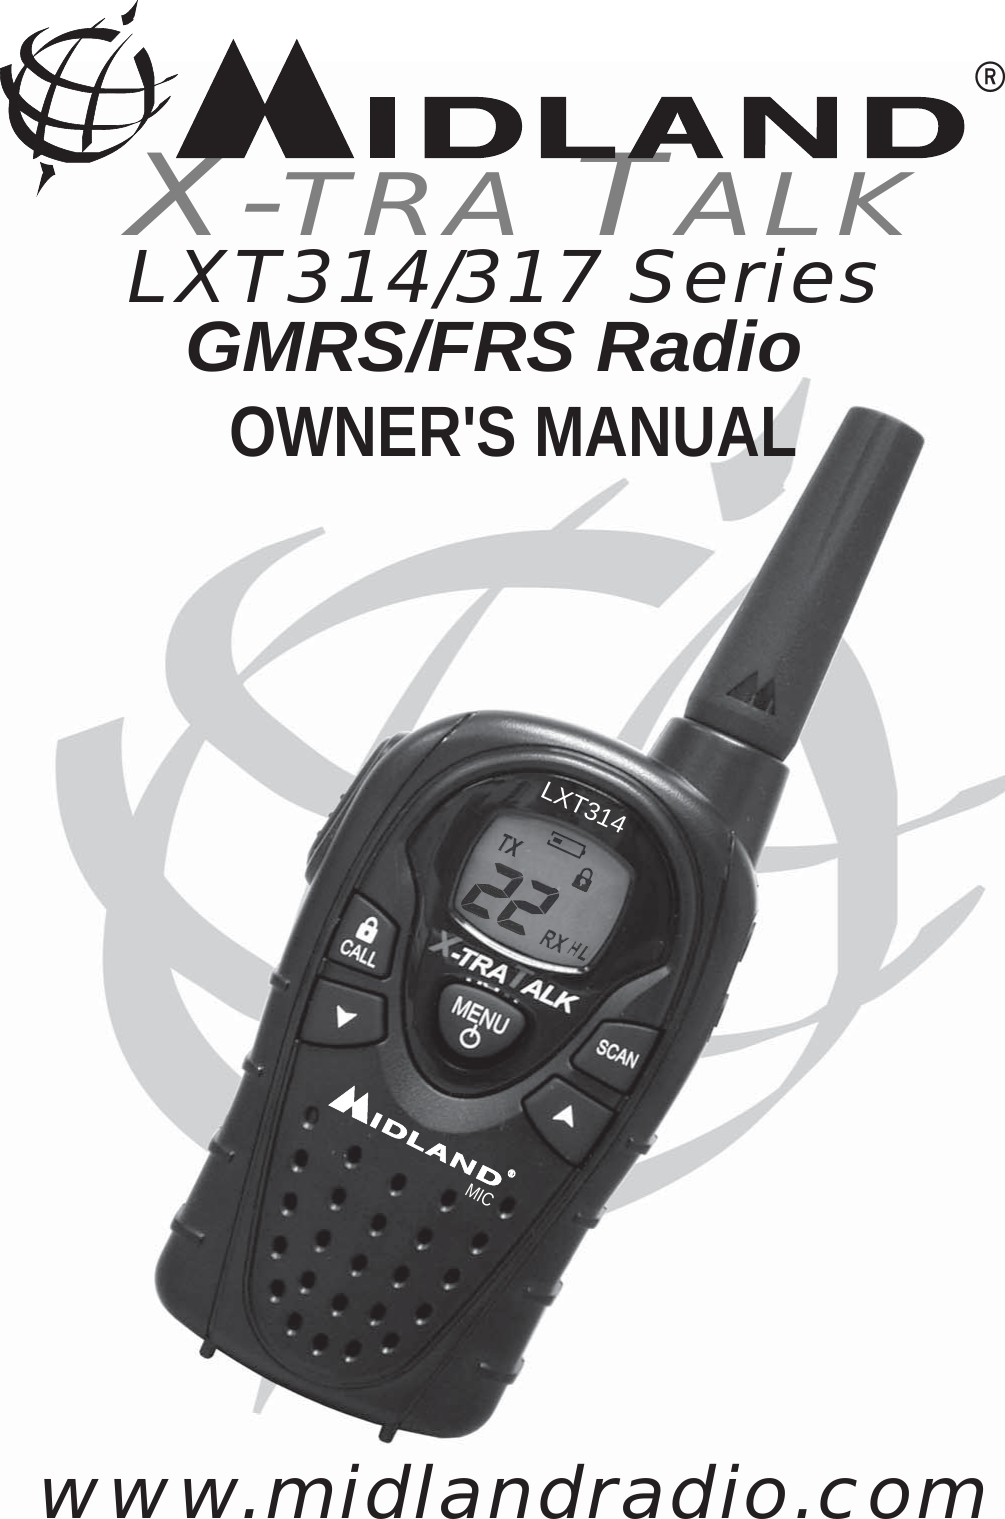  LXT314/317 Series     GMRS/FRS RadioX-TRA TALK®OWNER&apos;S MANUALwww.midlandradio.com®®MICLXT314